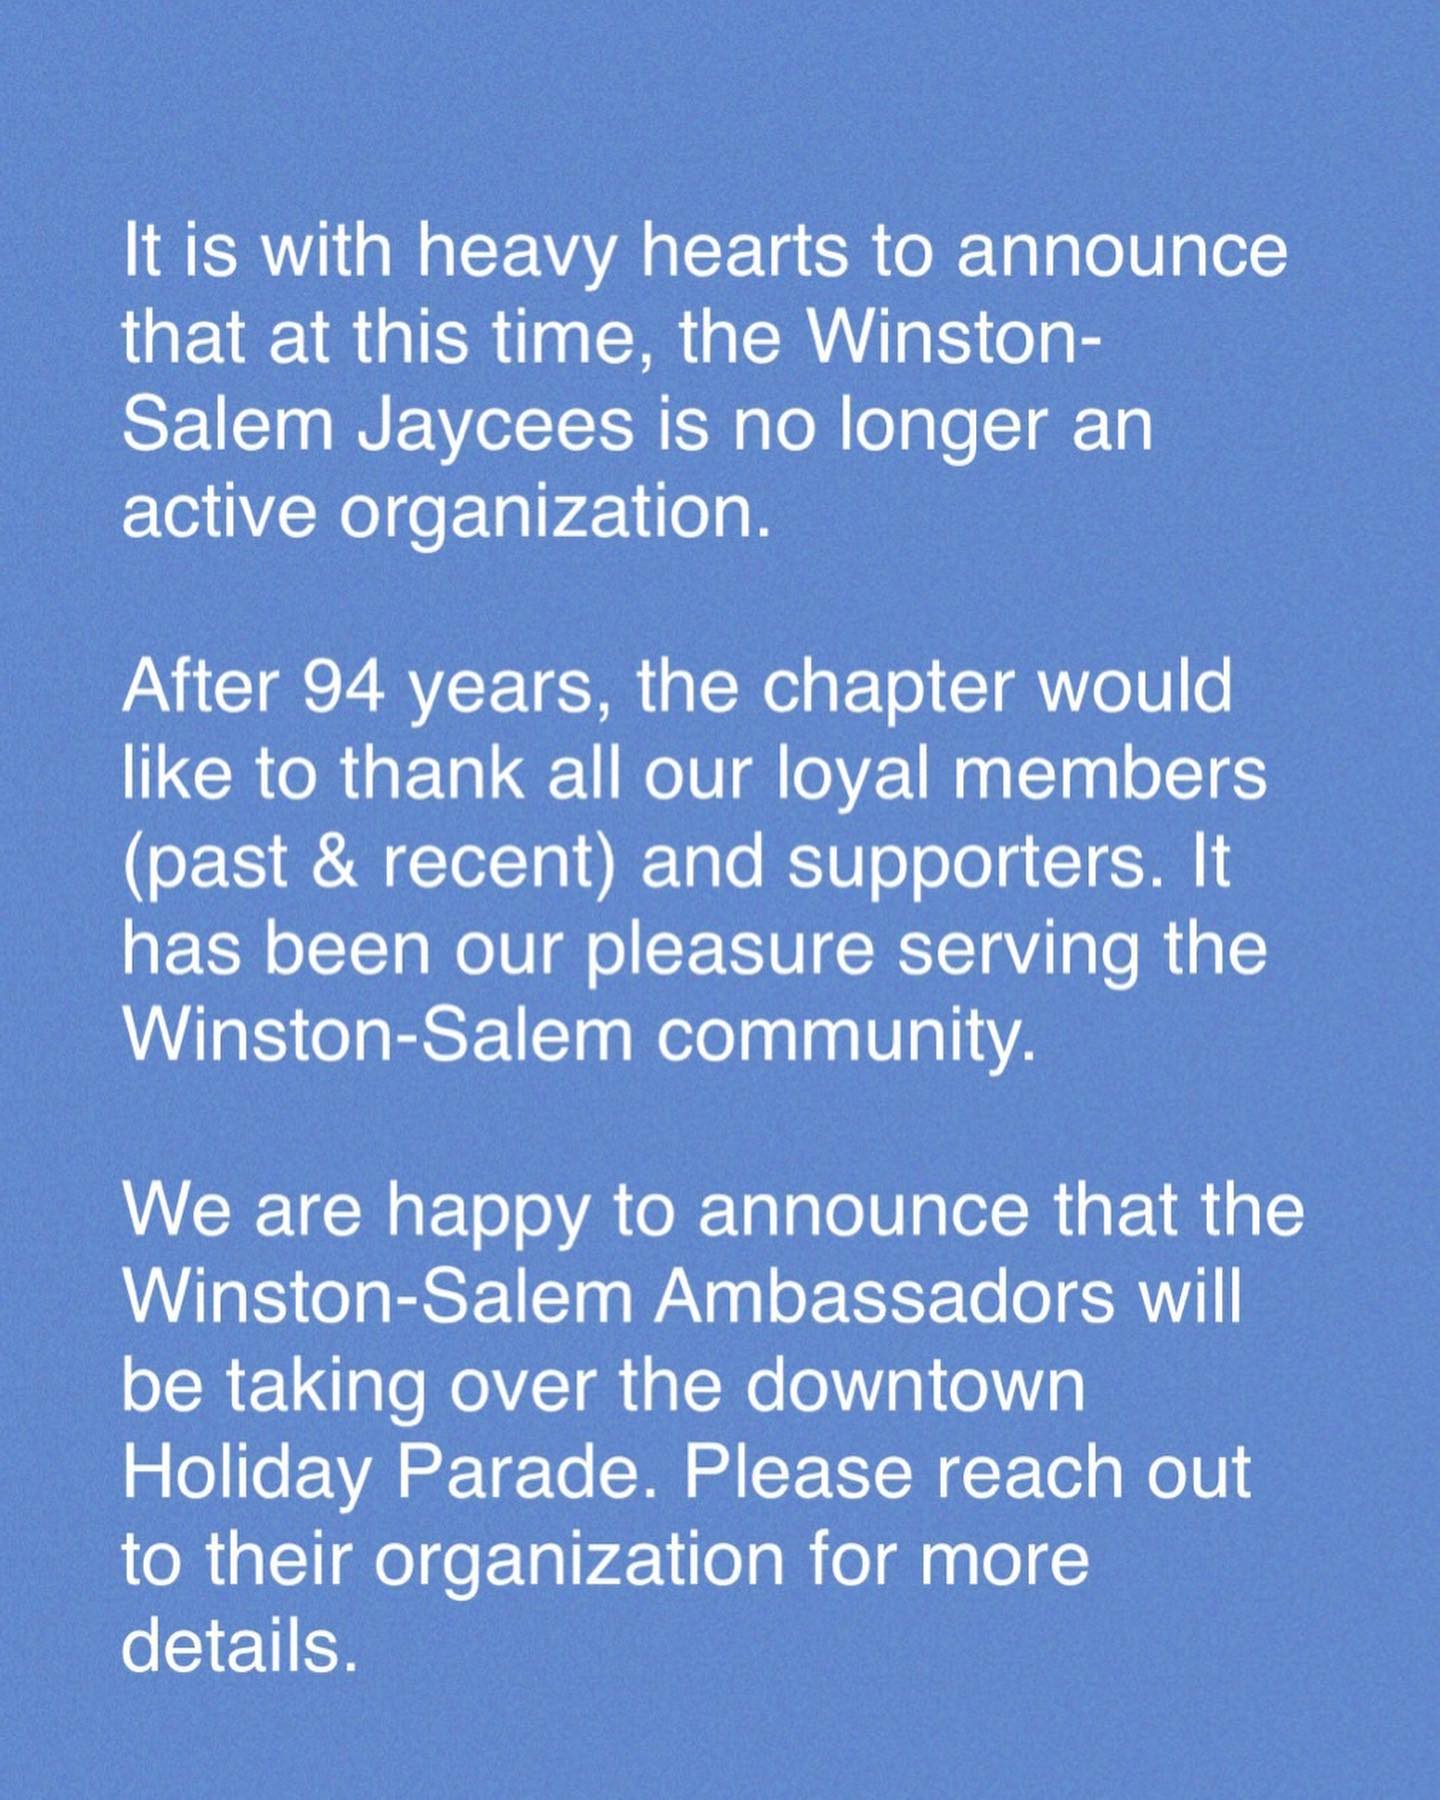 Winston-Salem Jaycees is no longer an active organization